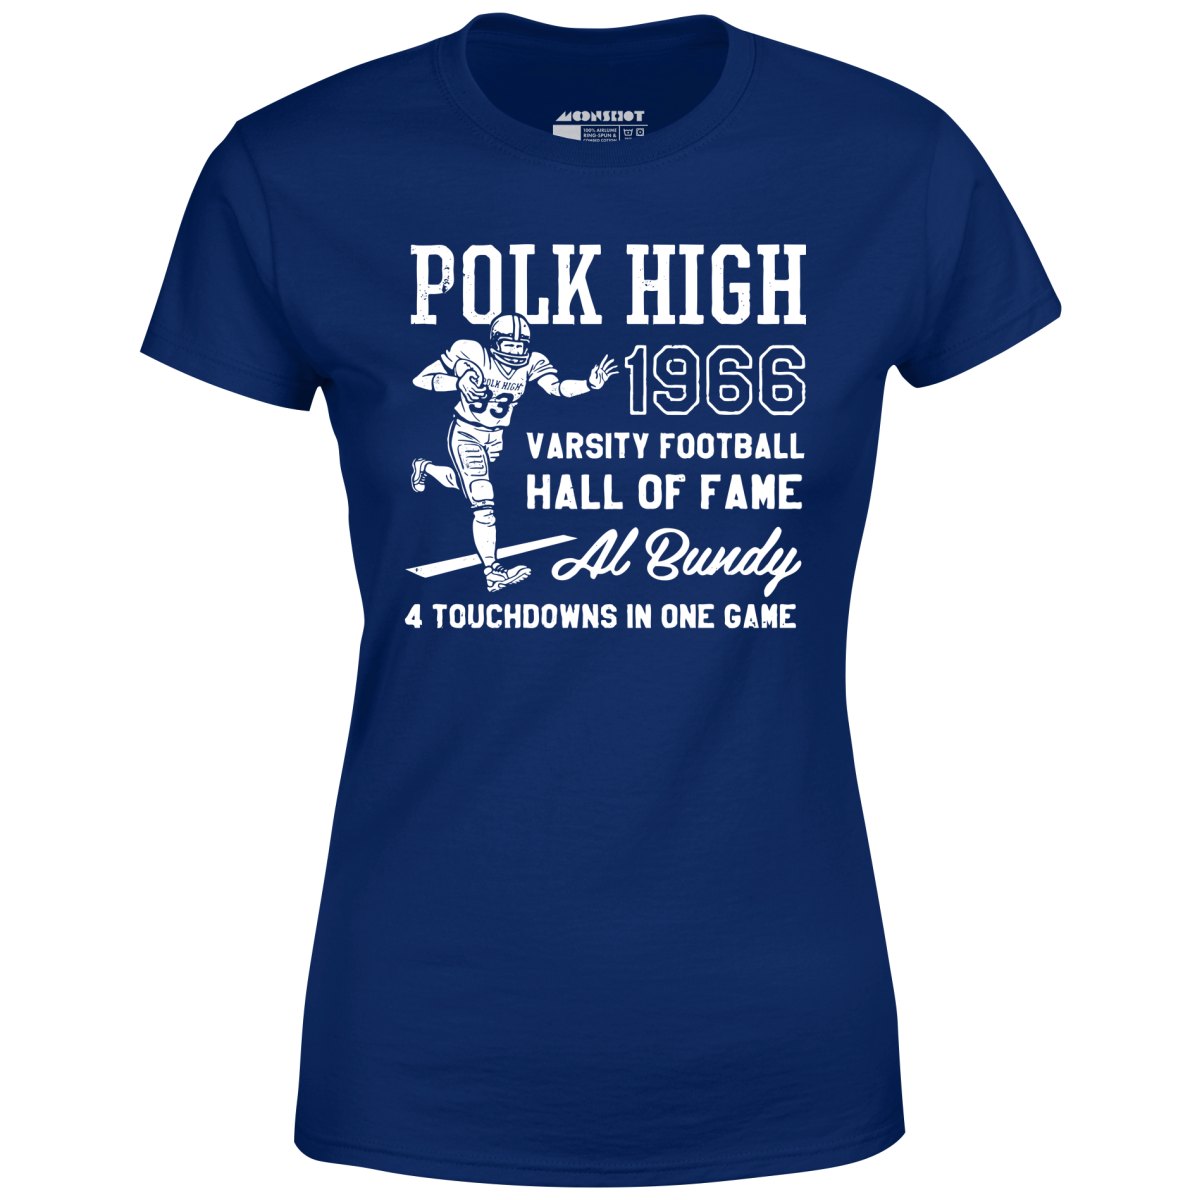 Al Bundy - 1966 Polk High Varsity Football Hall of Fame - Women's T-Shirt